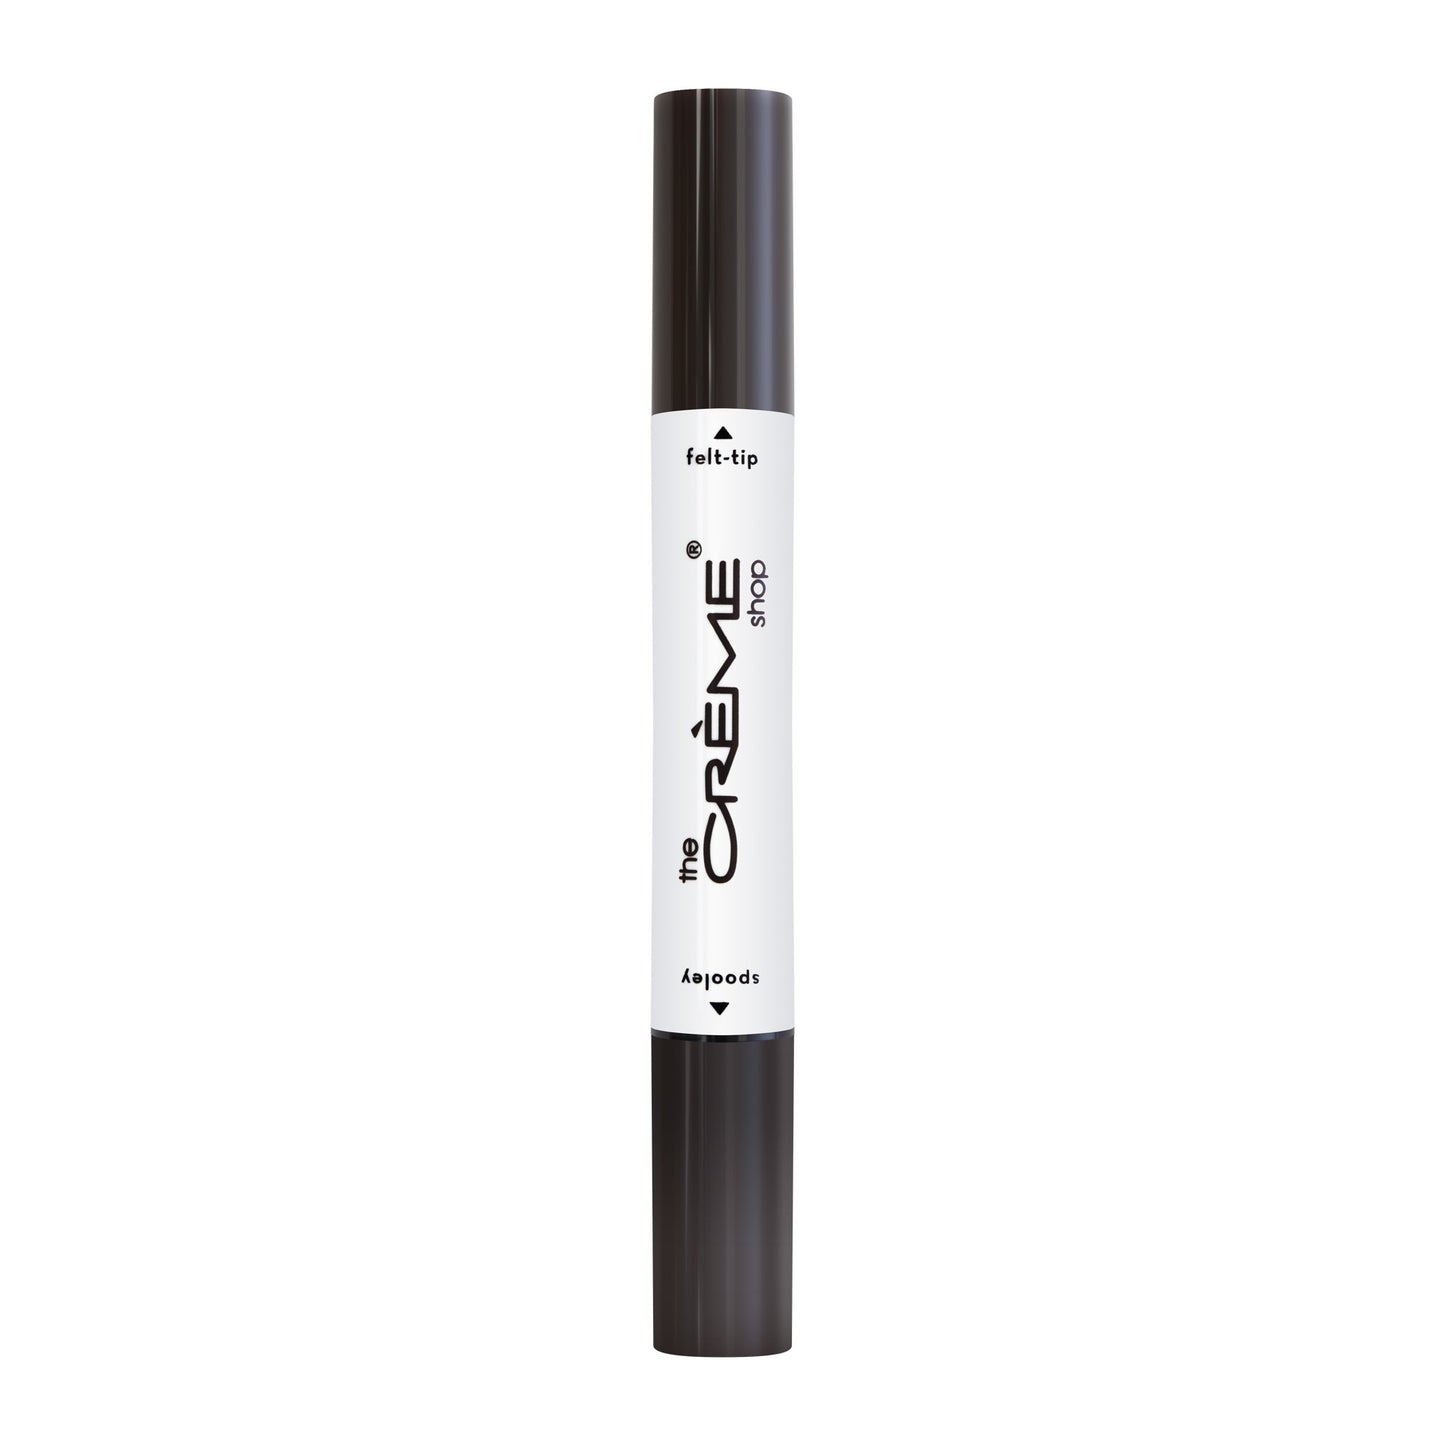 BIG Brow Marker | 2-In-1 Felt-Tip Brow Pen & Spooley Brow Pen The Crème Shop Dark (Big) 